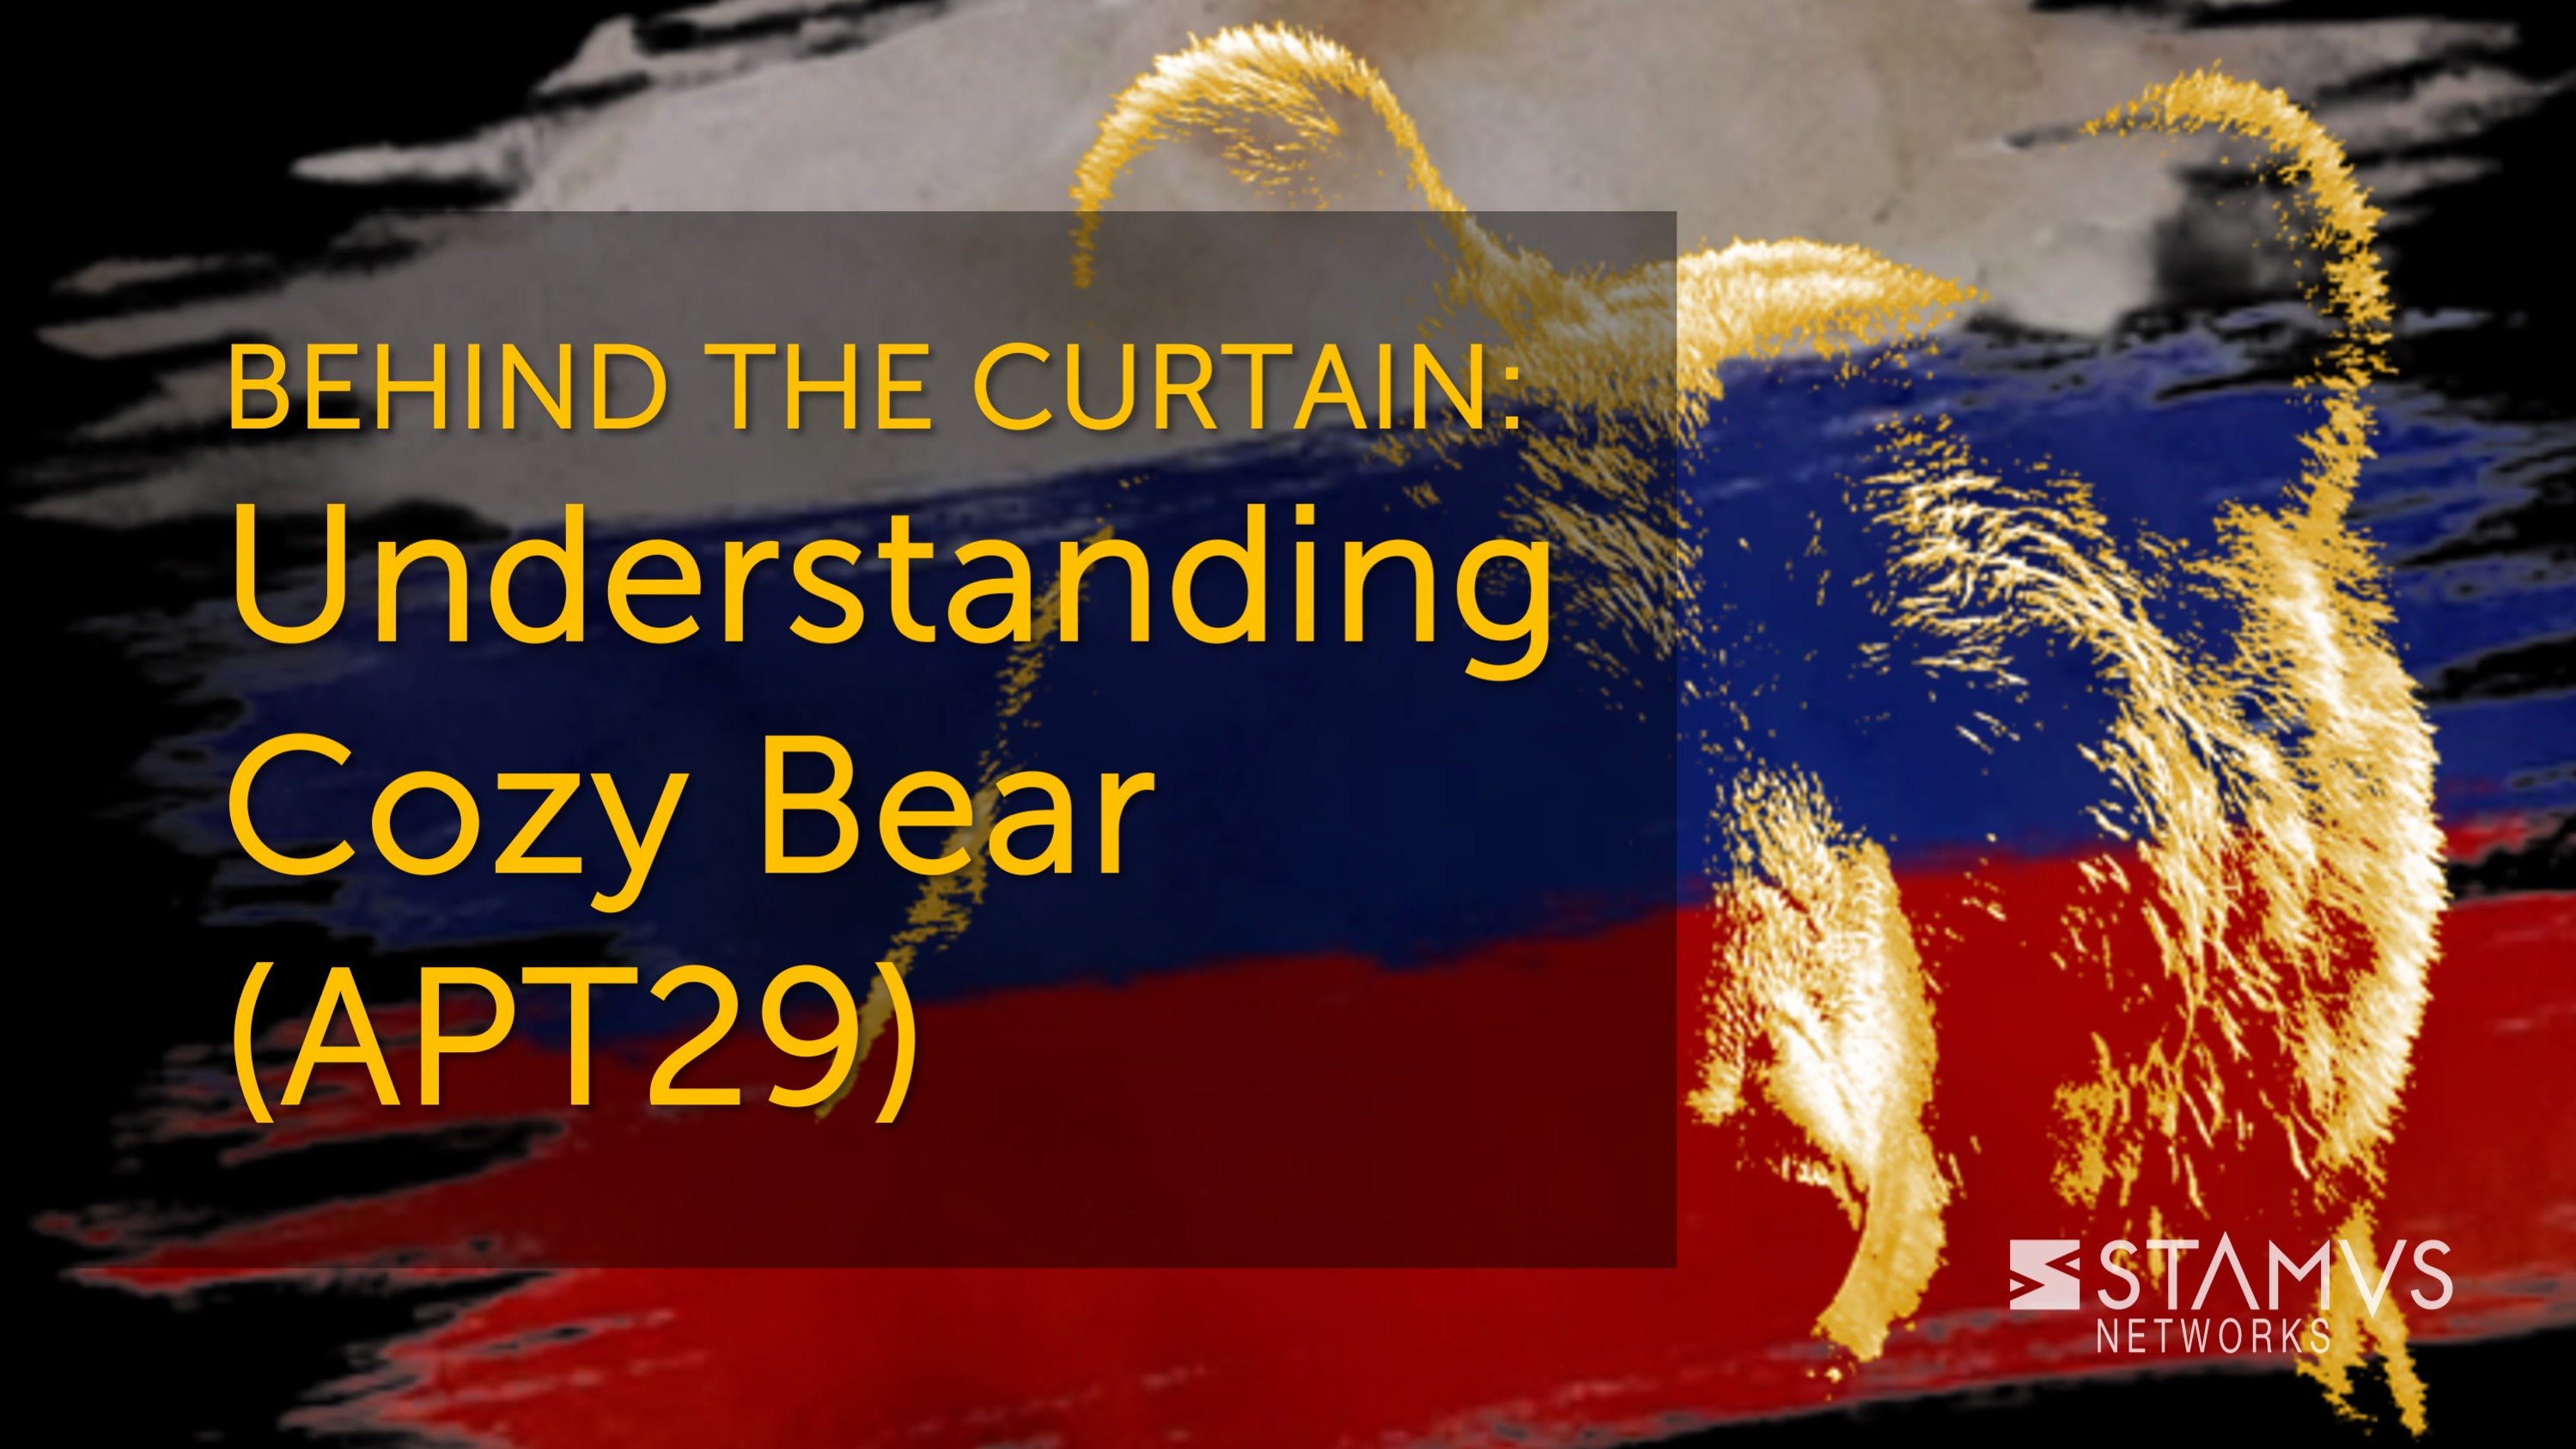 Behind the Curtain: Understanding Cozy Bear (APT29)